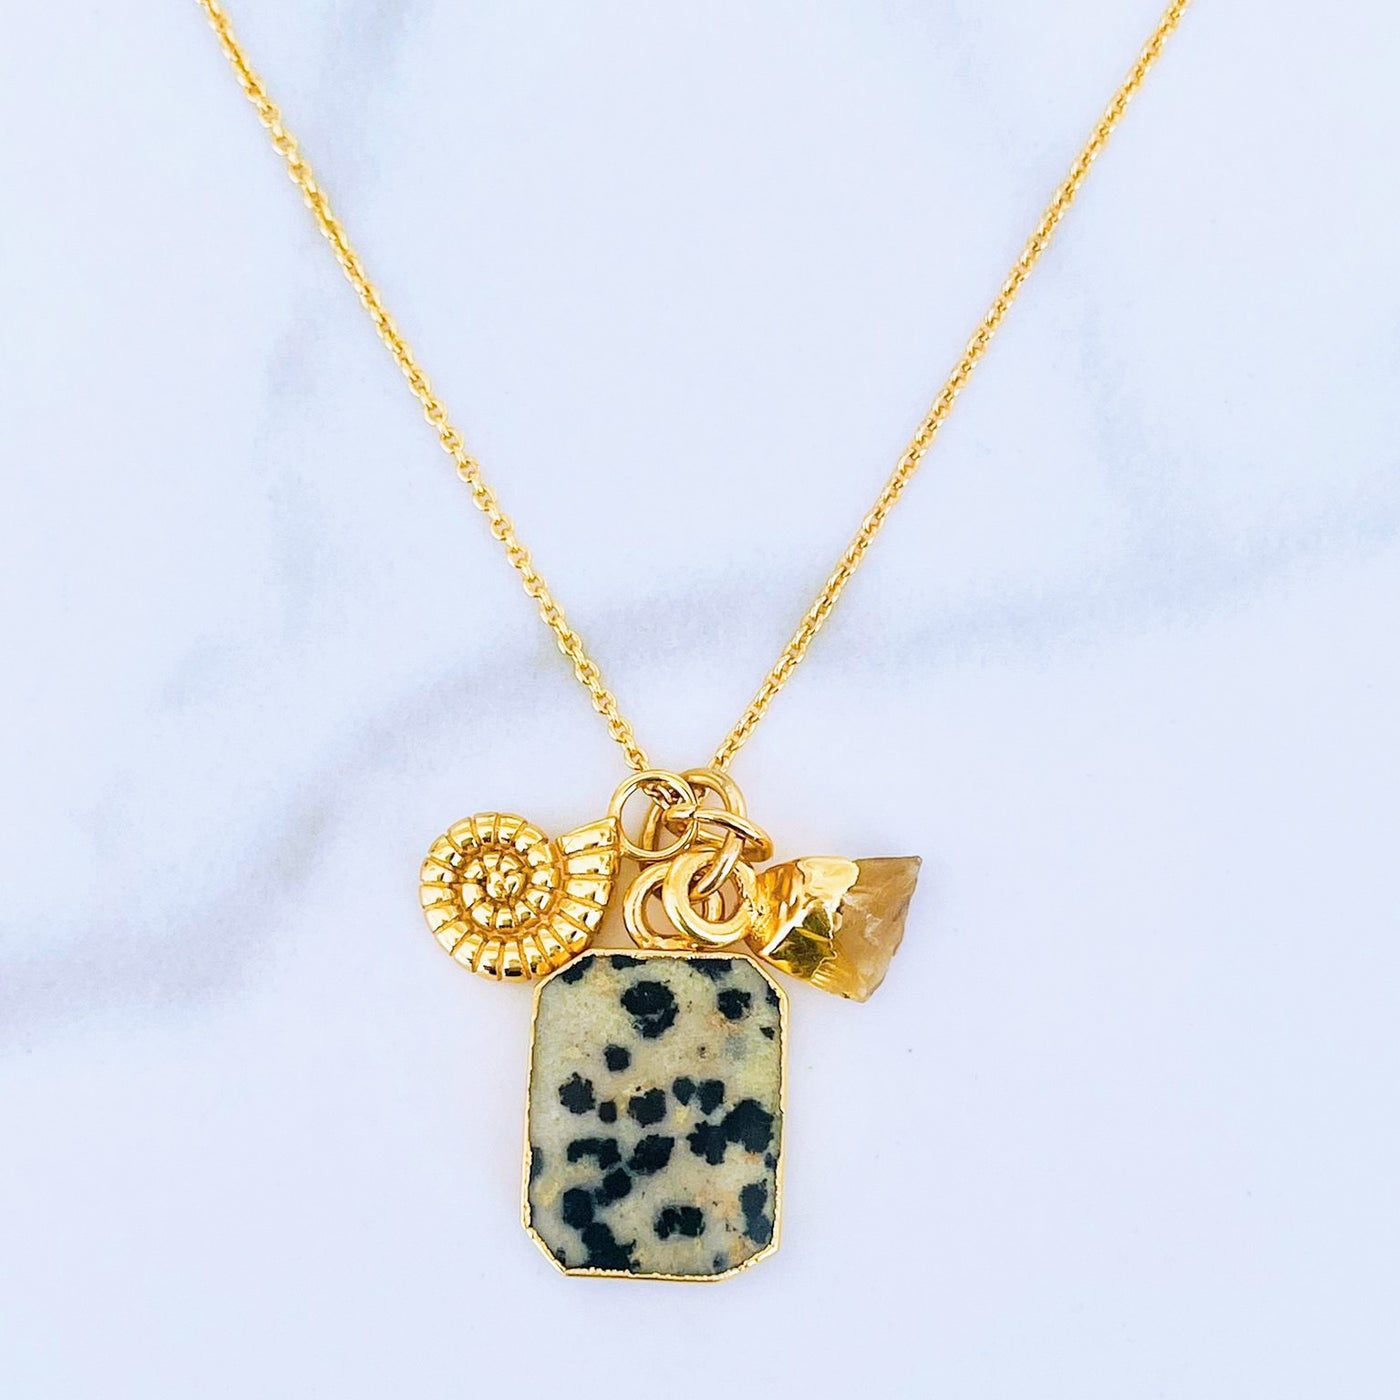 Gold plated dalmatian jasper, citrine and ammonite charm pendant necklace